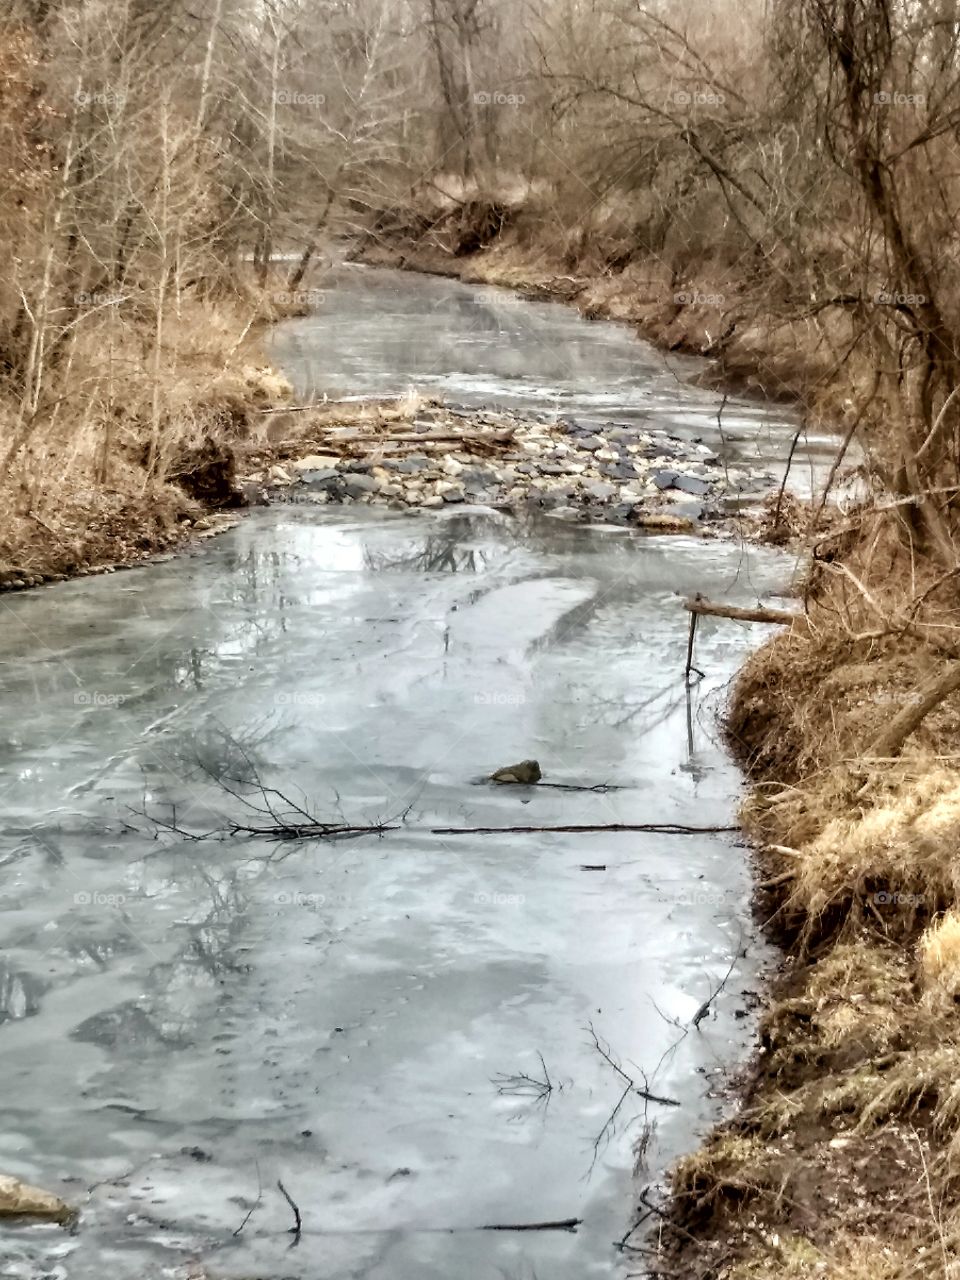 Creek in Rural area of Missouri.